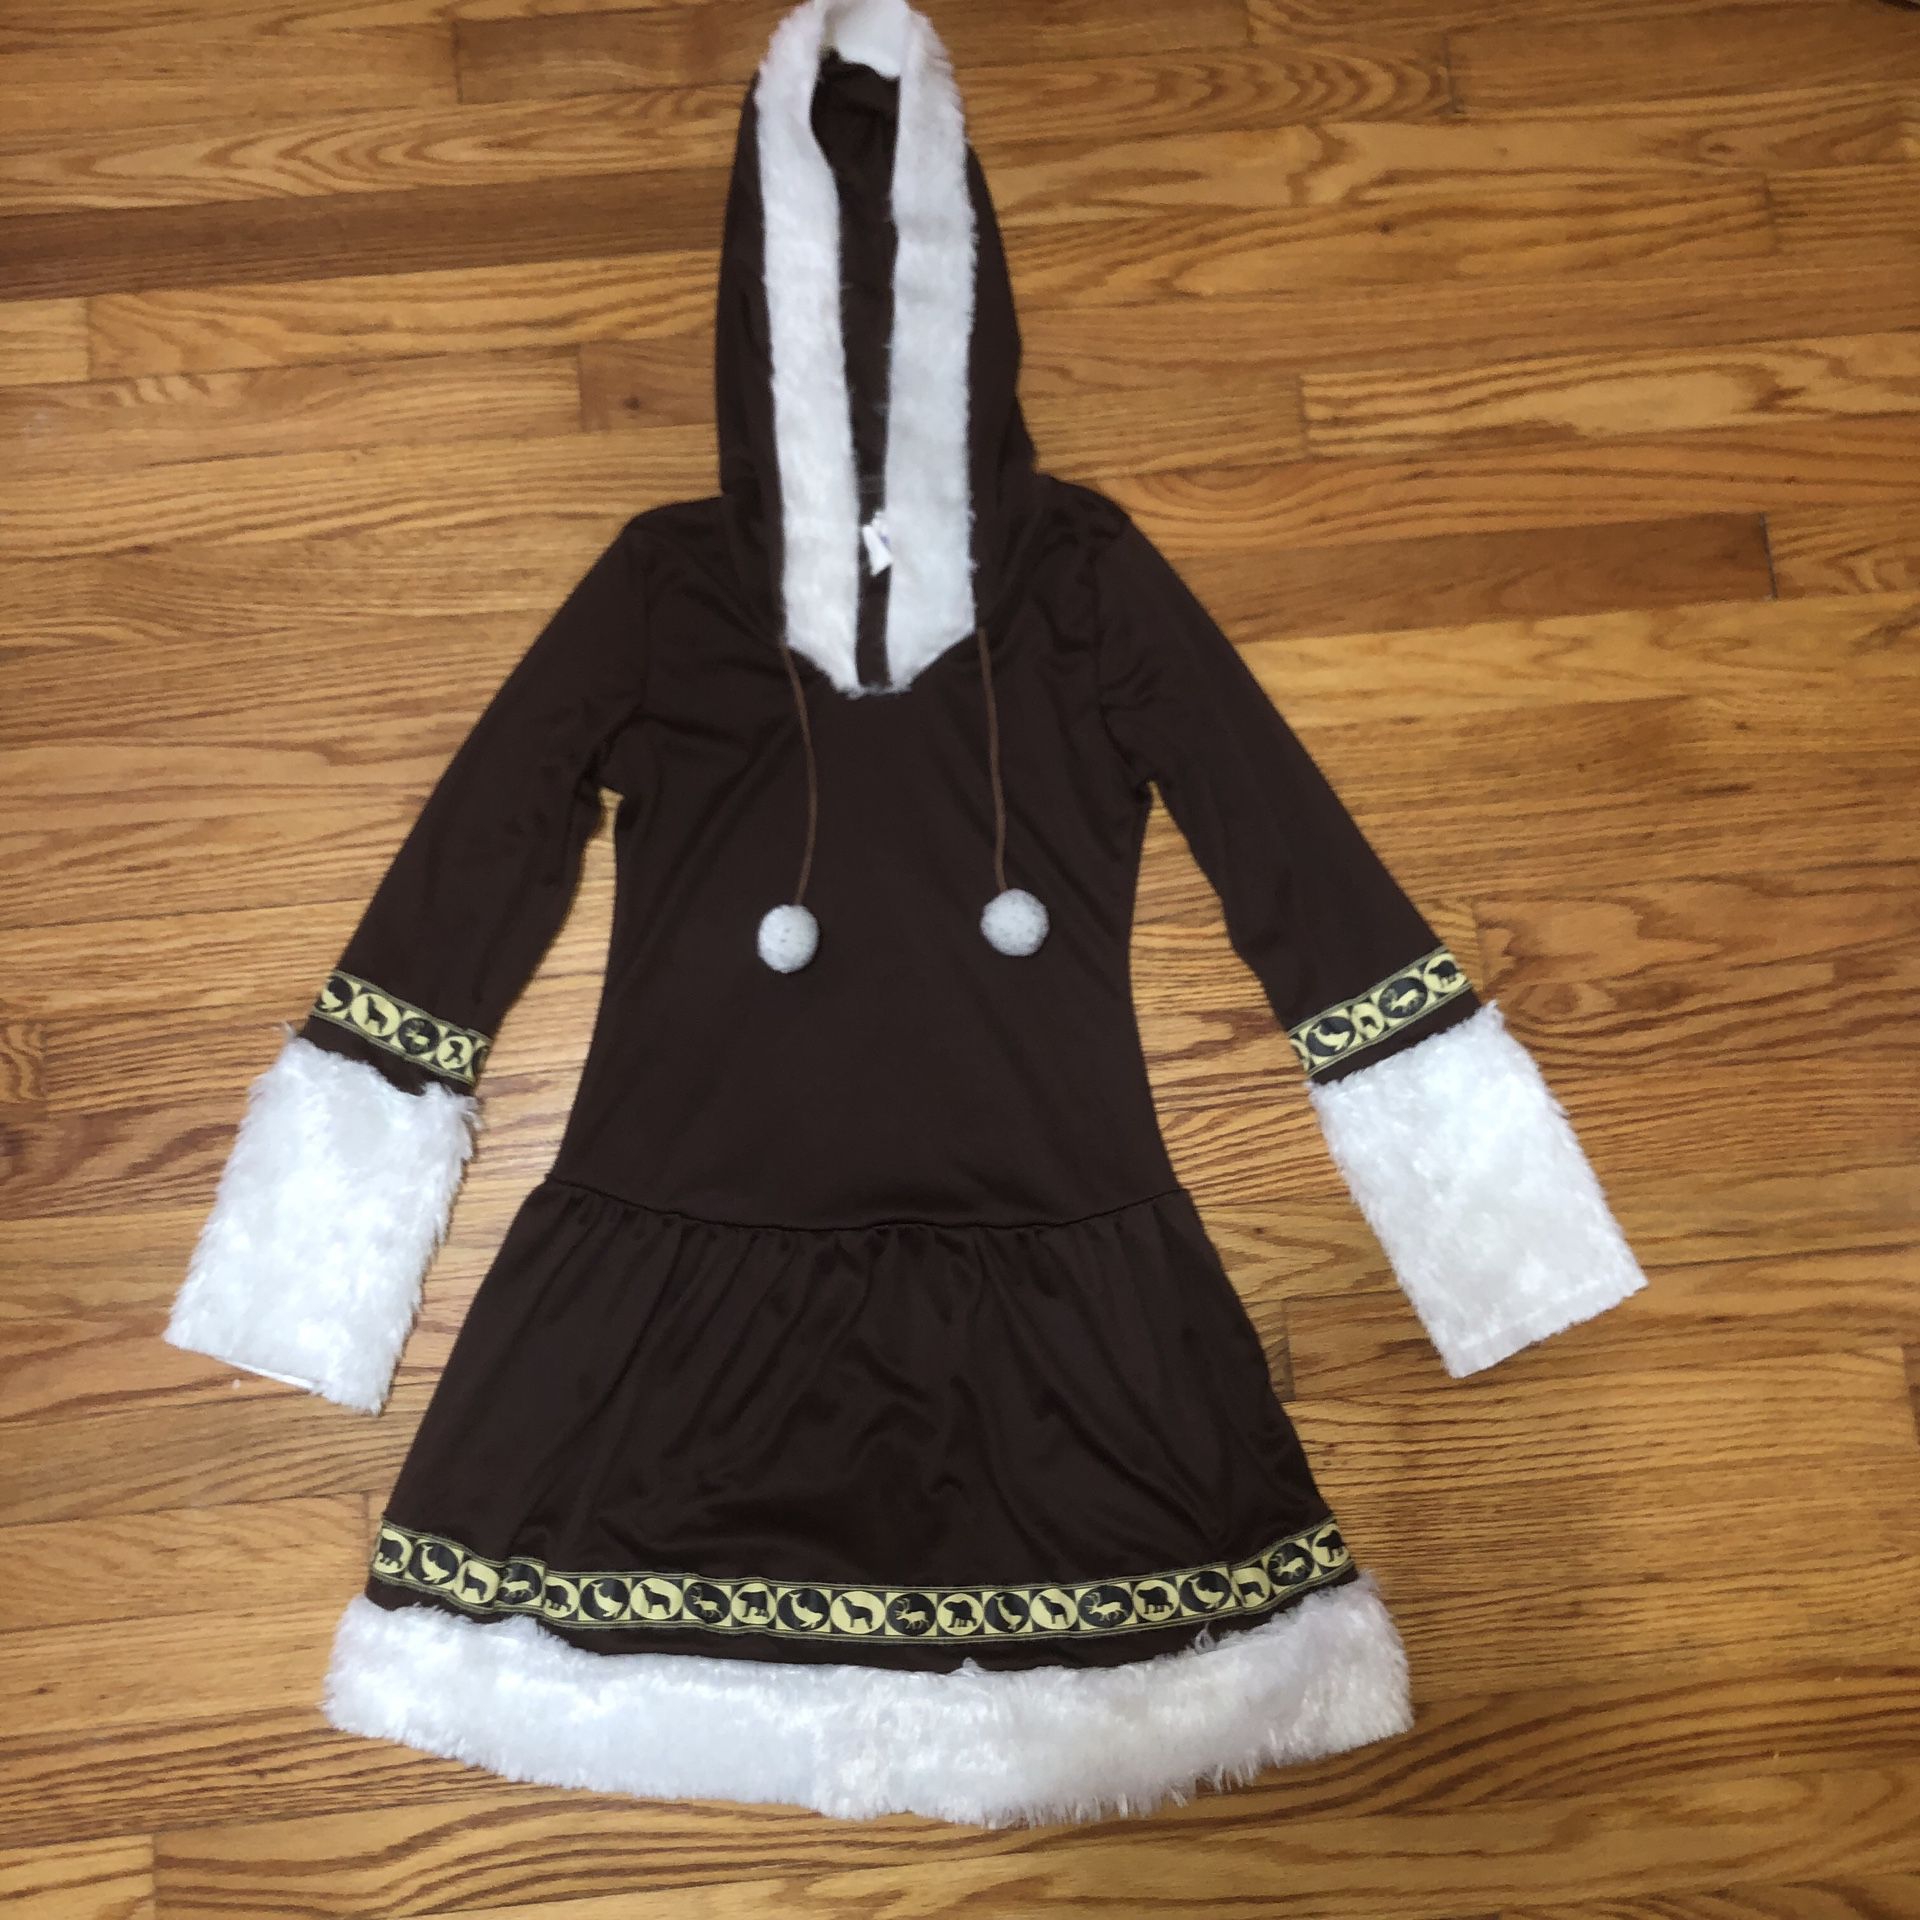 Juniors size 3-5 Eskimo costume dress